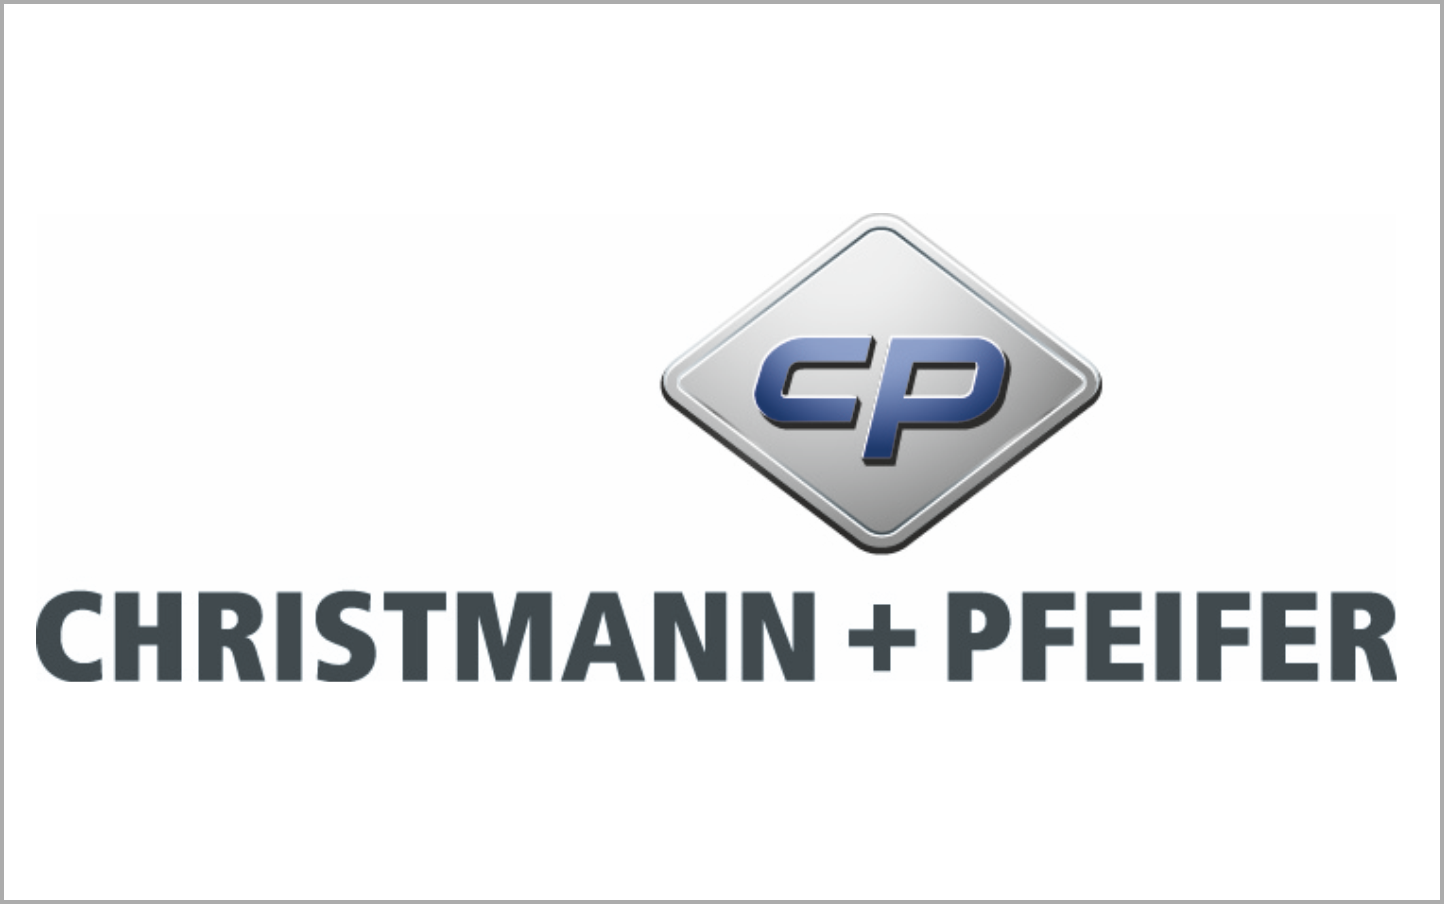 Christmann + Pfeifer